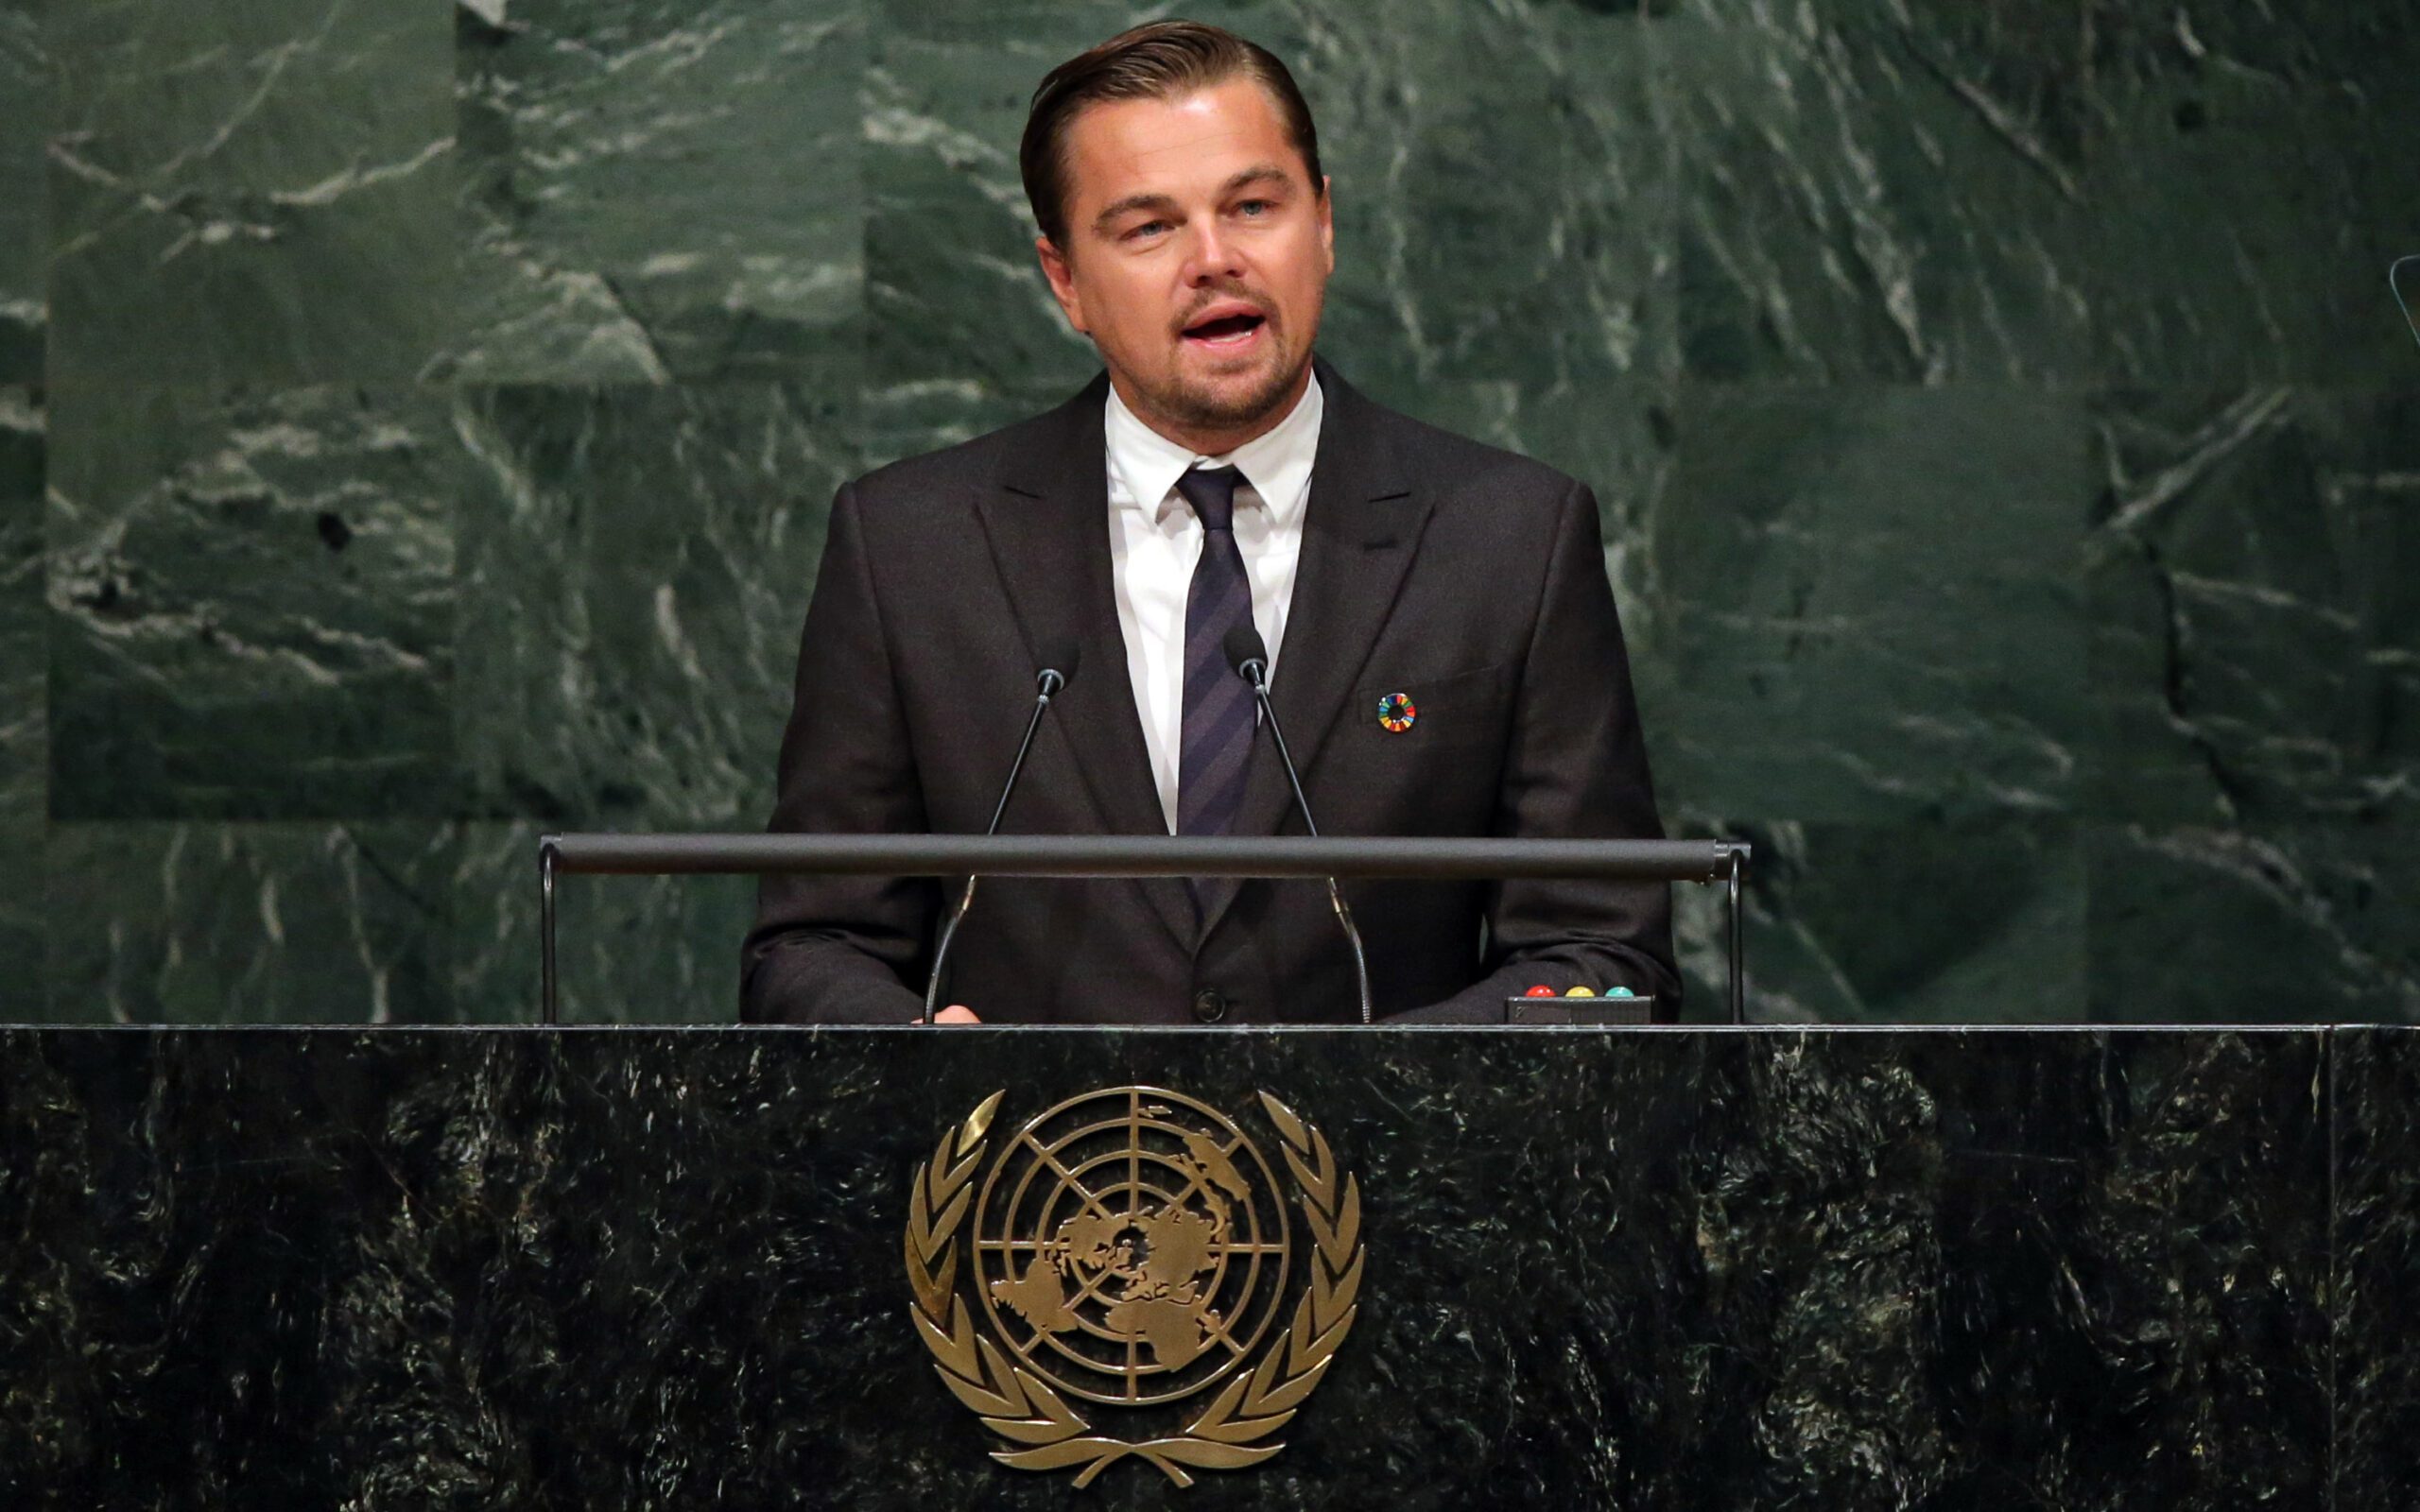 WATCH: Leonardo DiCaprio’s speech at UN climate signing